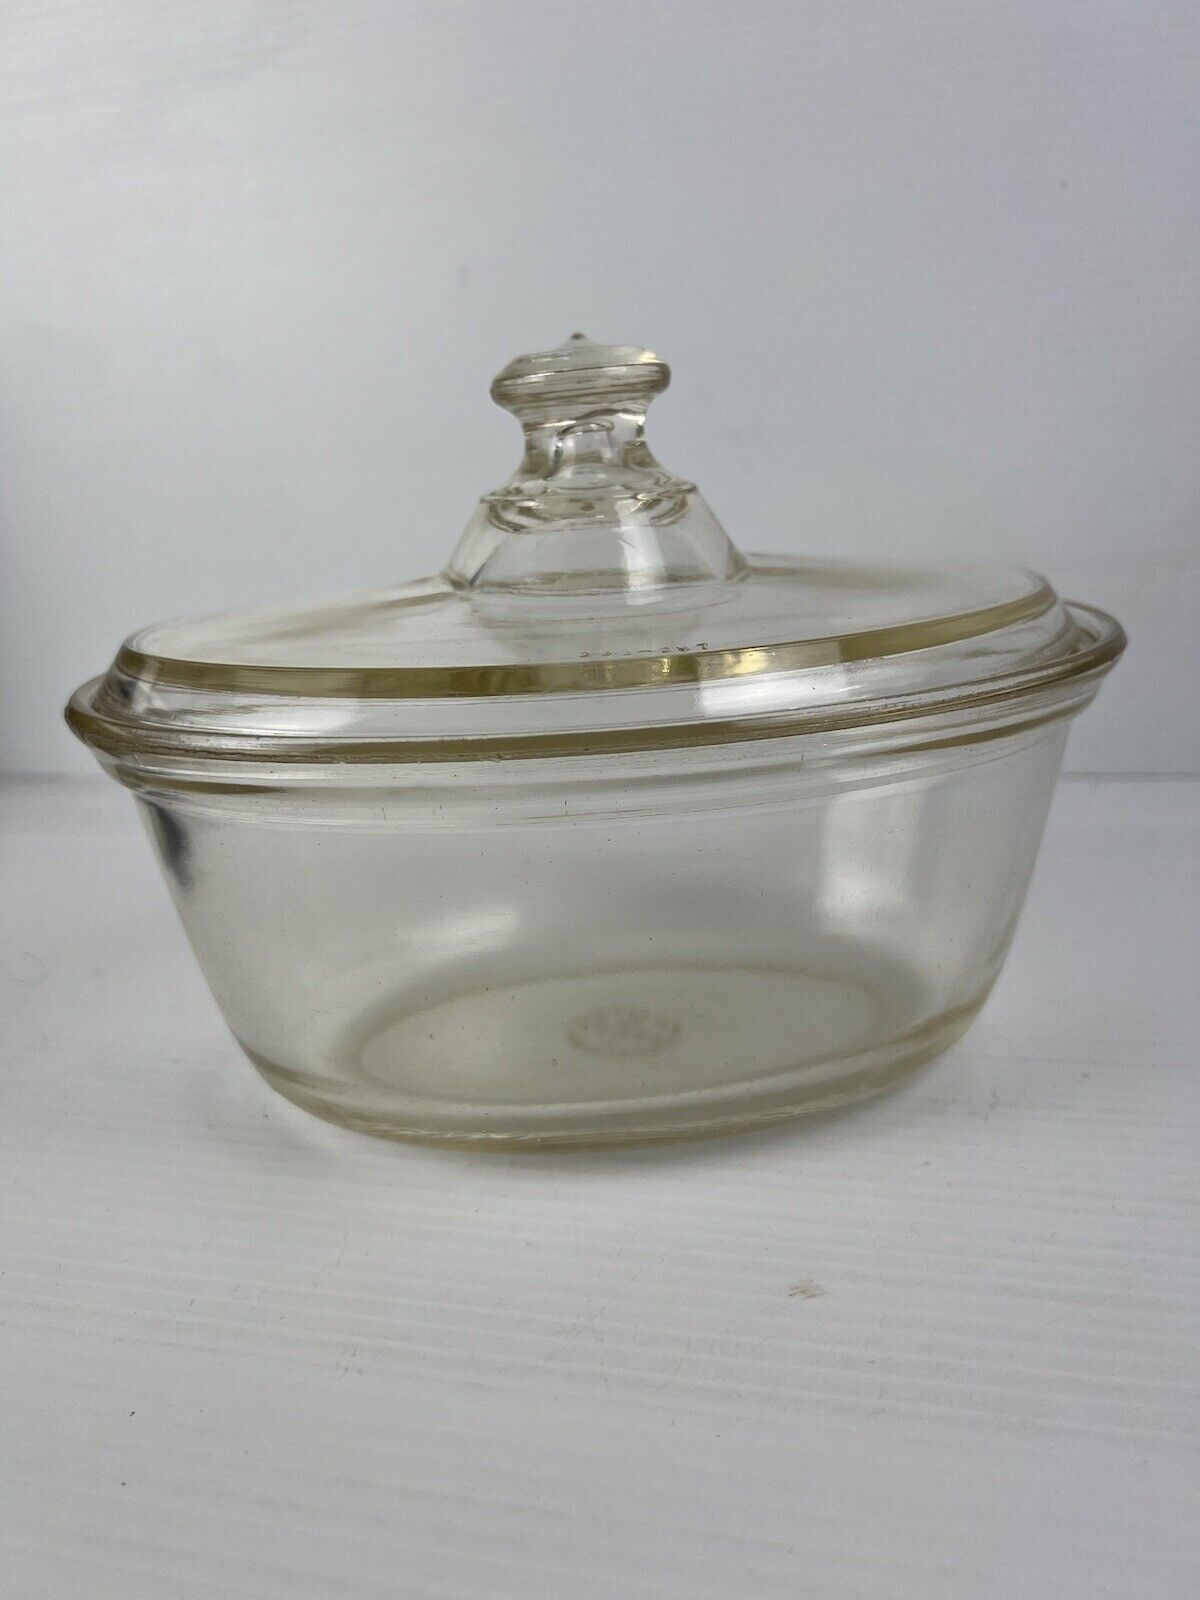 Antique/Vintage 1915-1920s Pyrex Glass Oval Casserole With kid 293-297 1 Quart